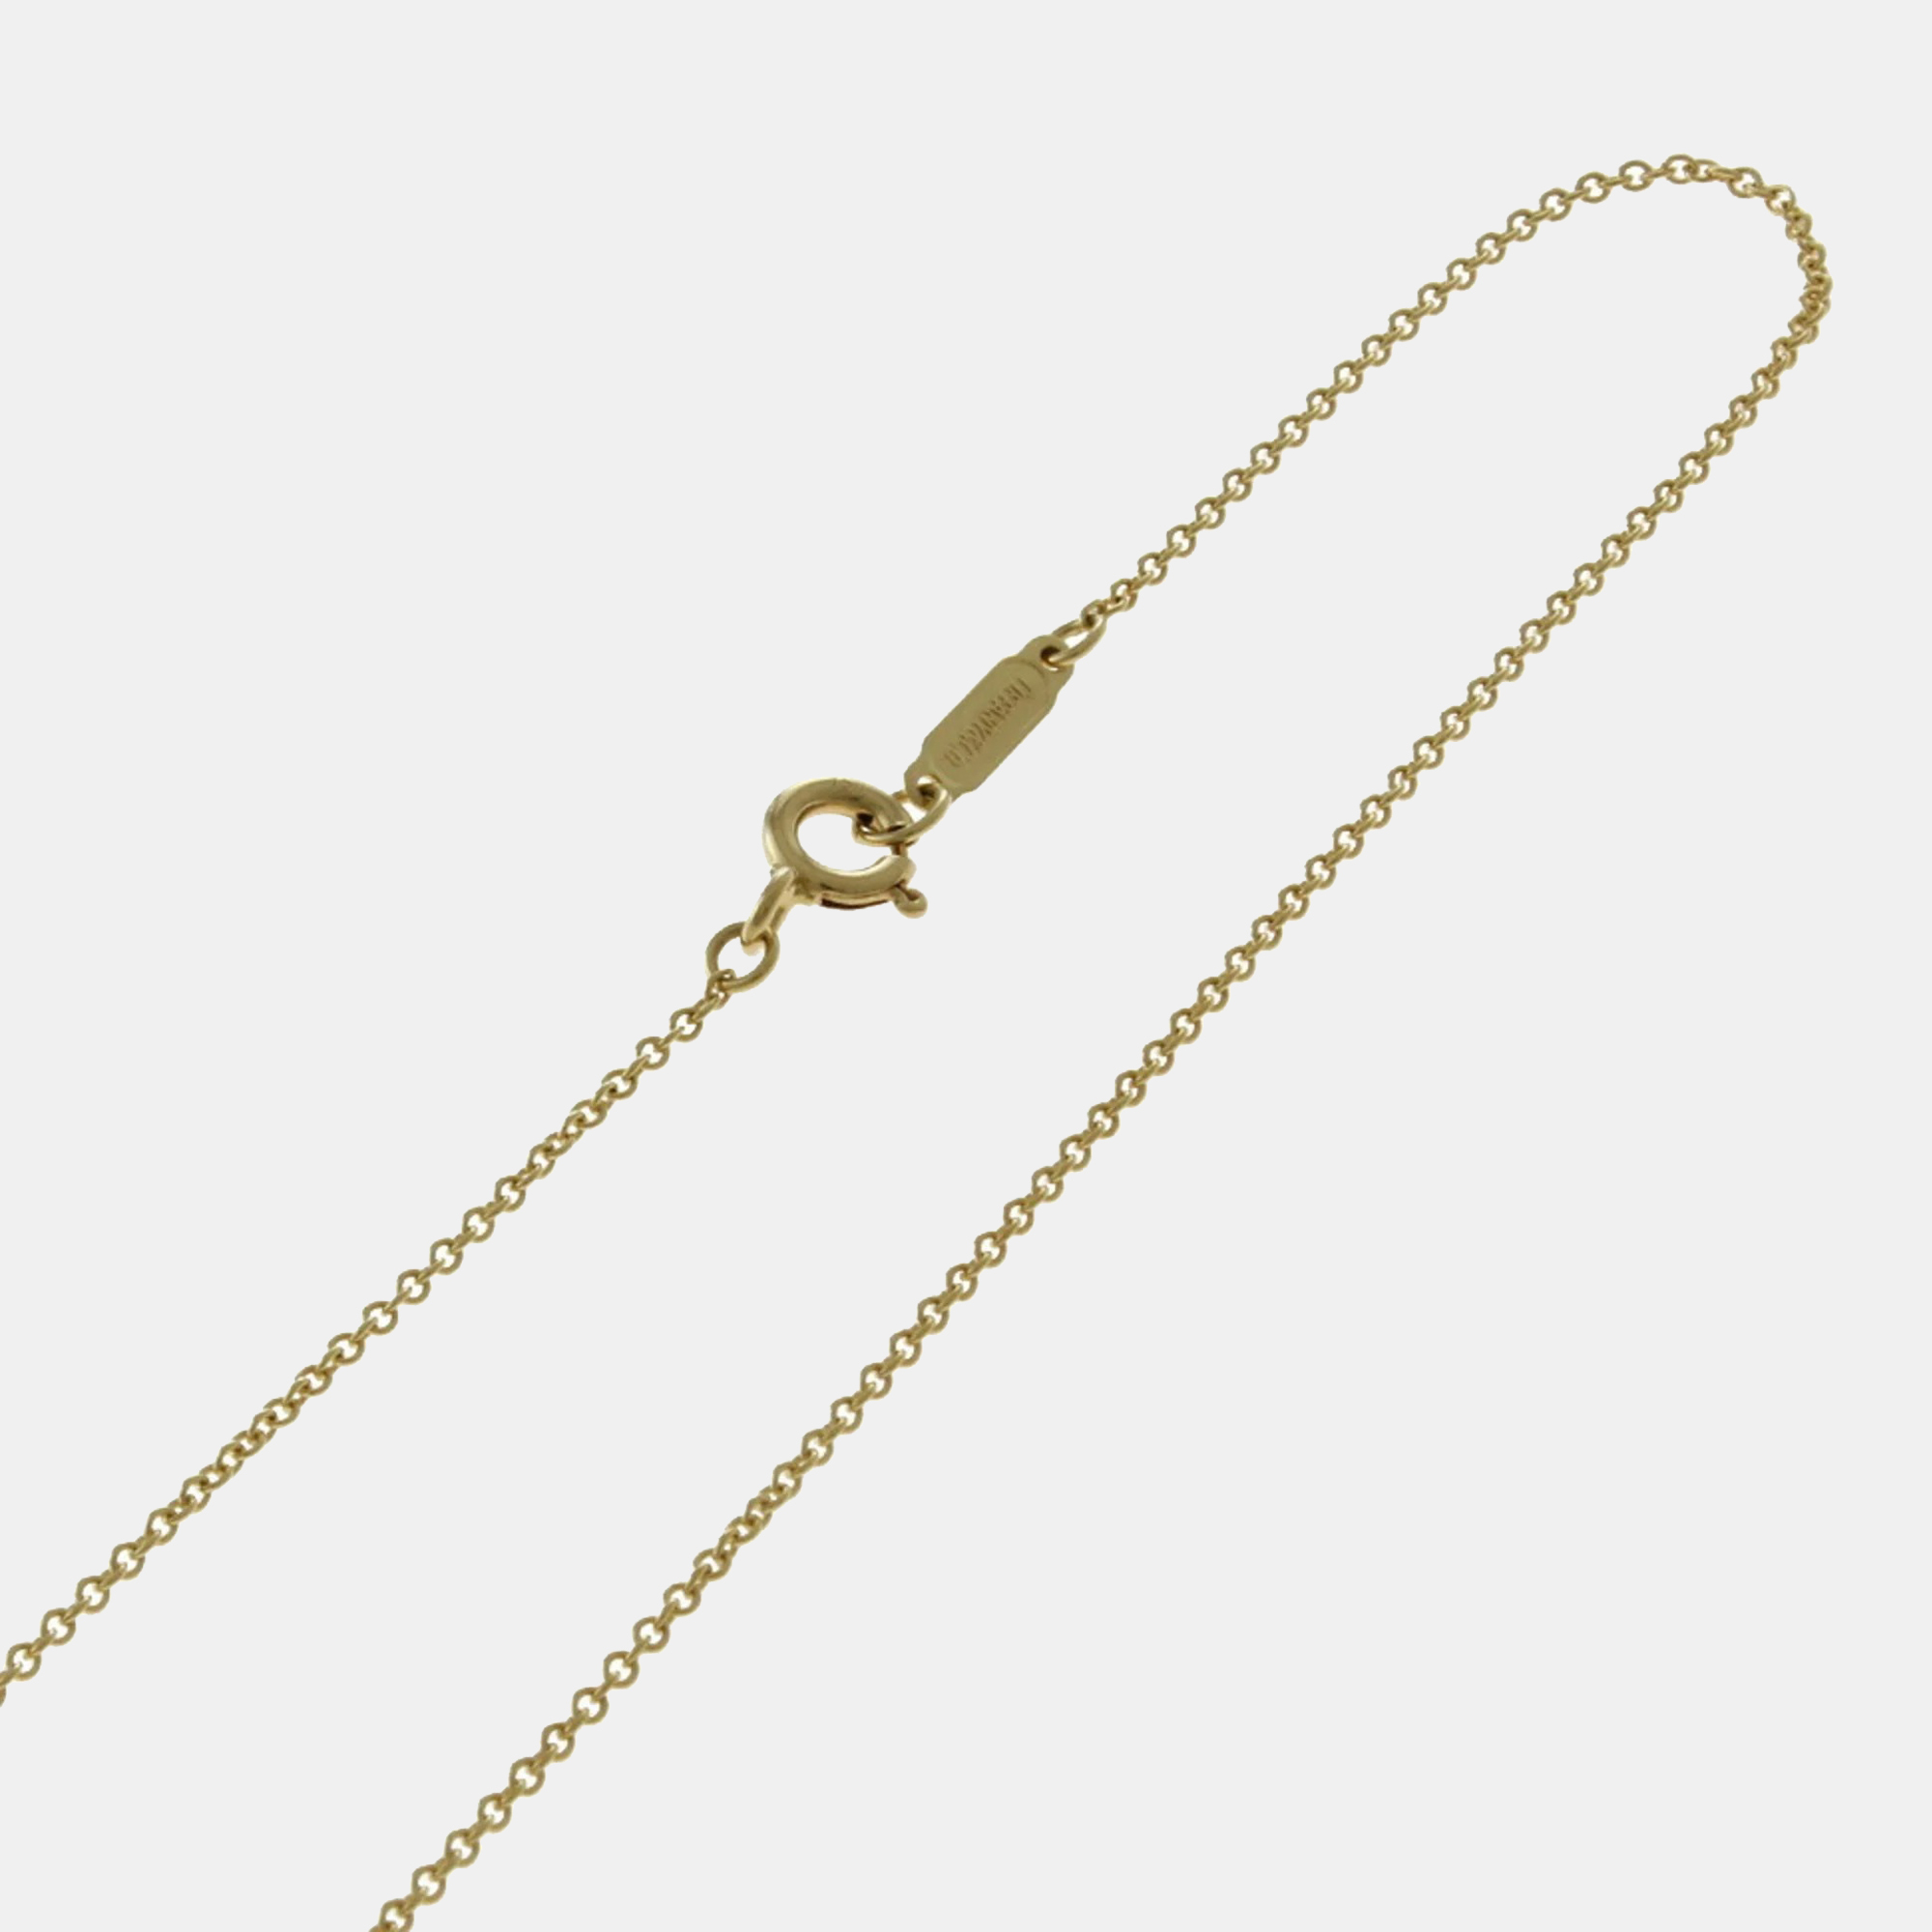 Tiffany & Co. 18K Yellow Gold And Diamond Etoile Heart Pendant Necklace